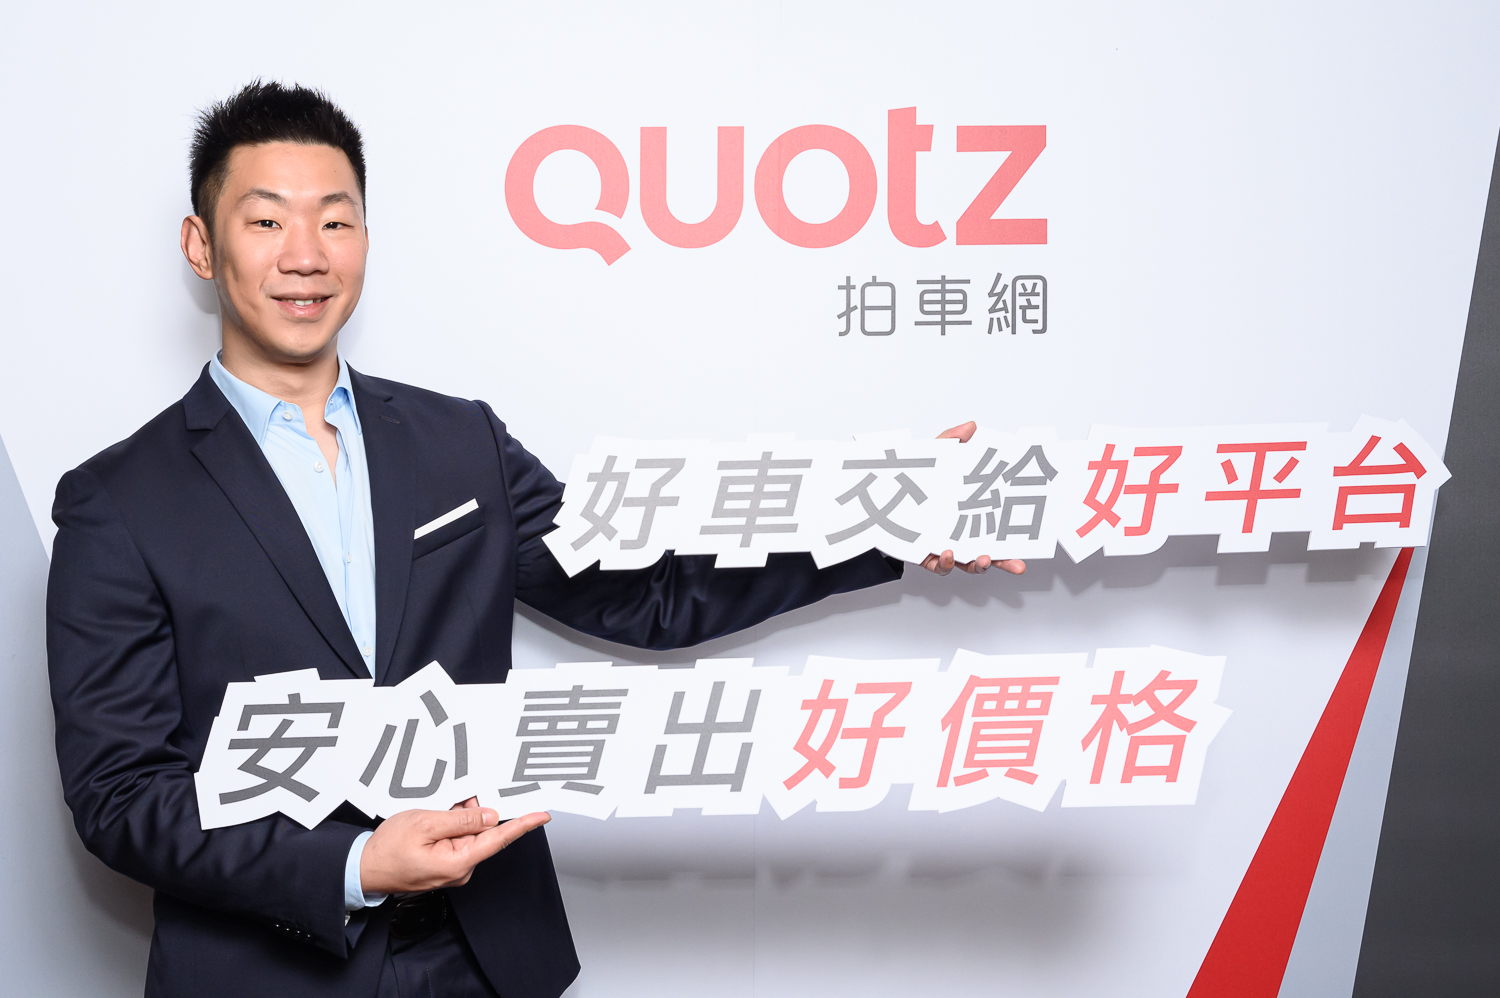 QUOTZ 拍車網的台灣總經理 Michael 預告將插旗全台，拓點至台中、高雄與東部，帶動中古車生態圈共好共榮。